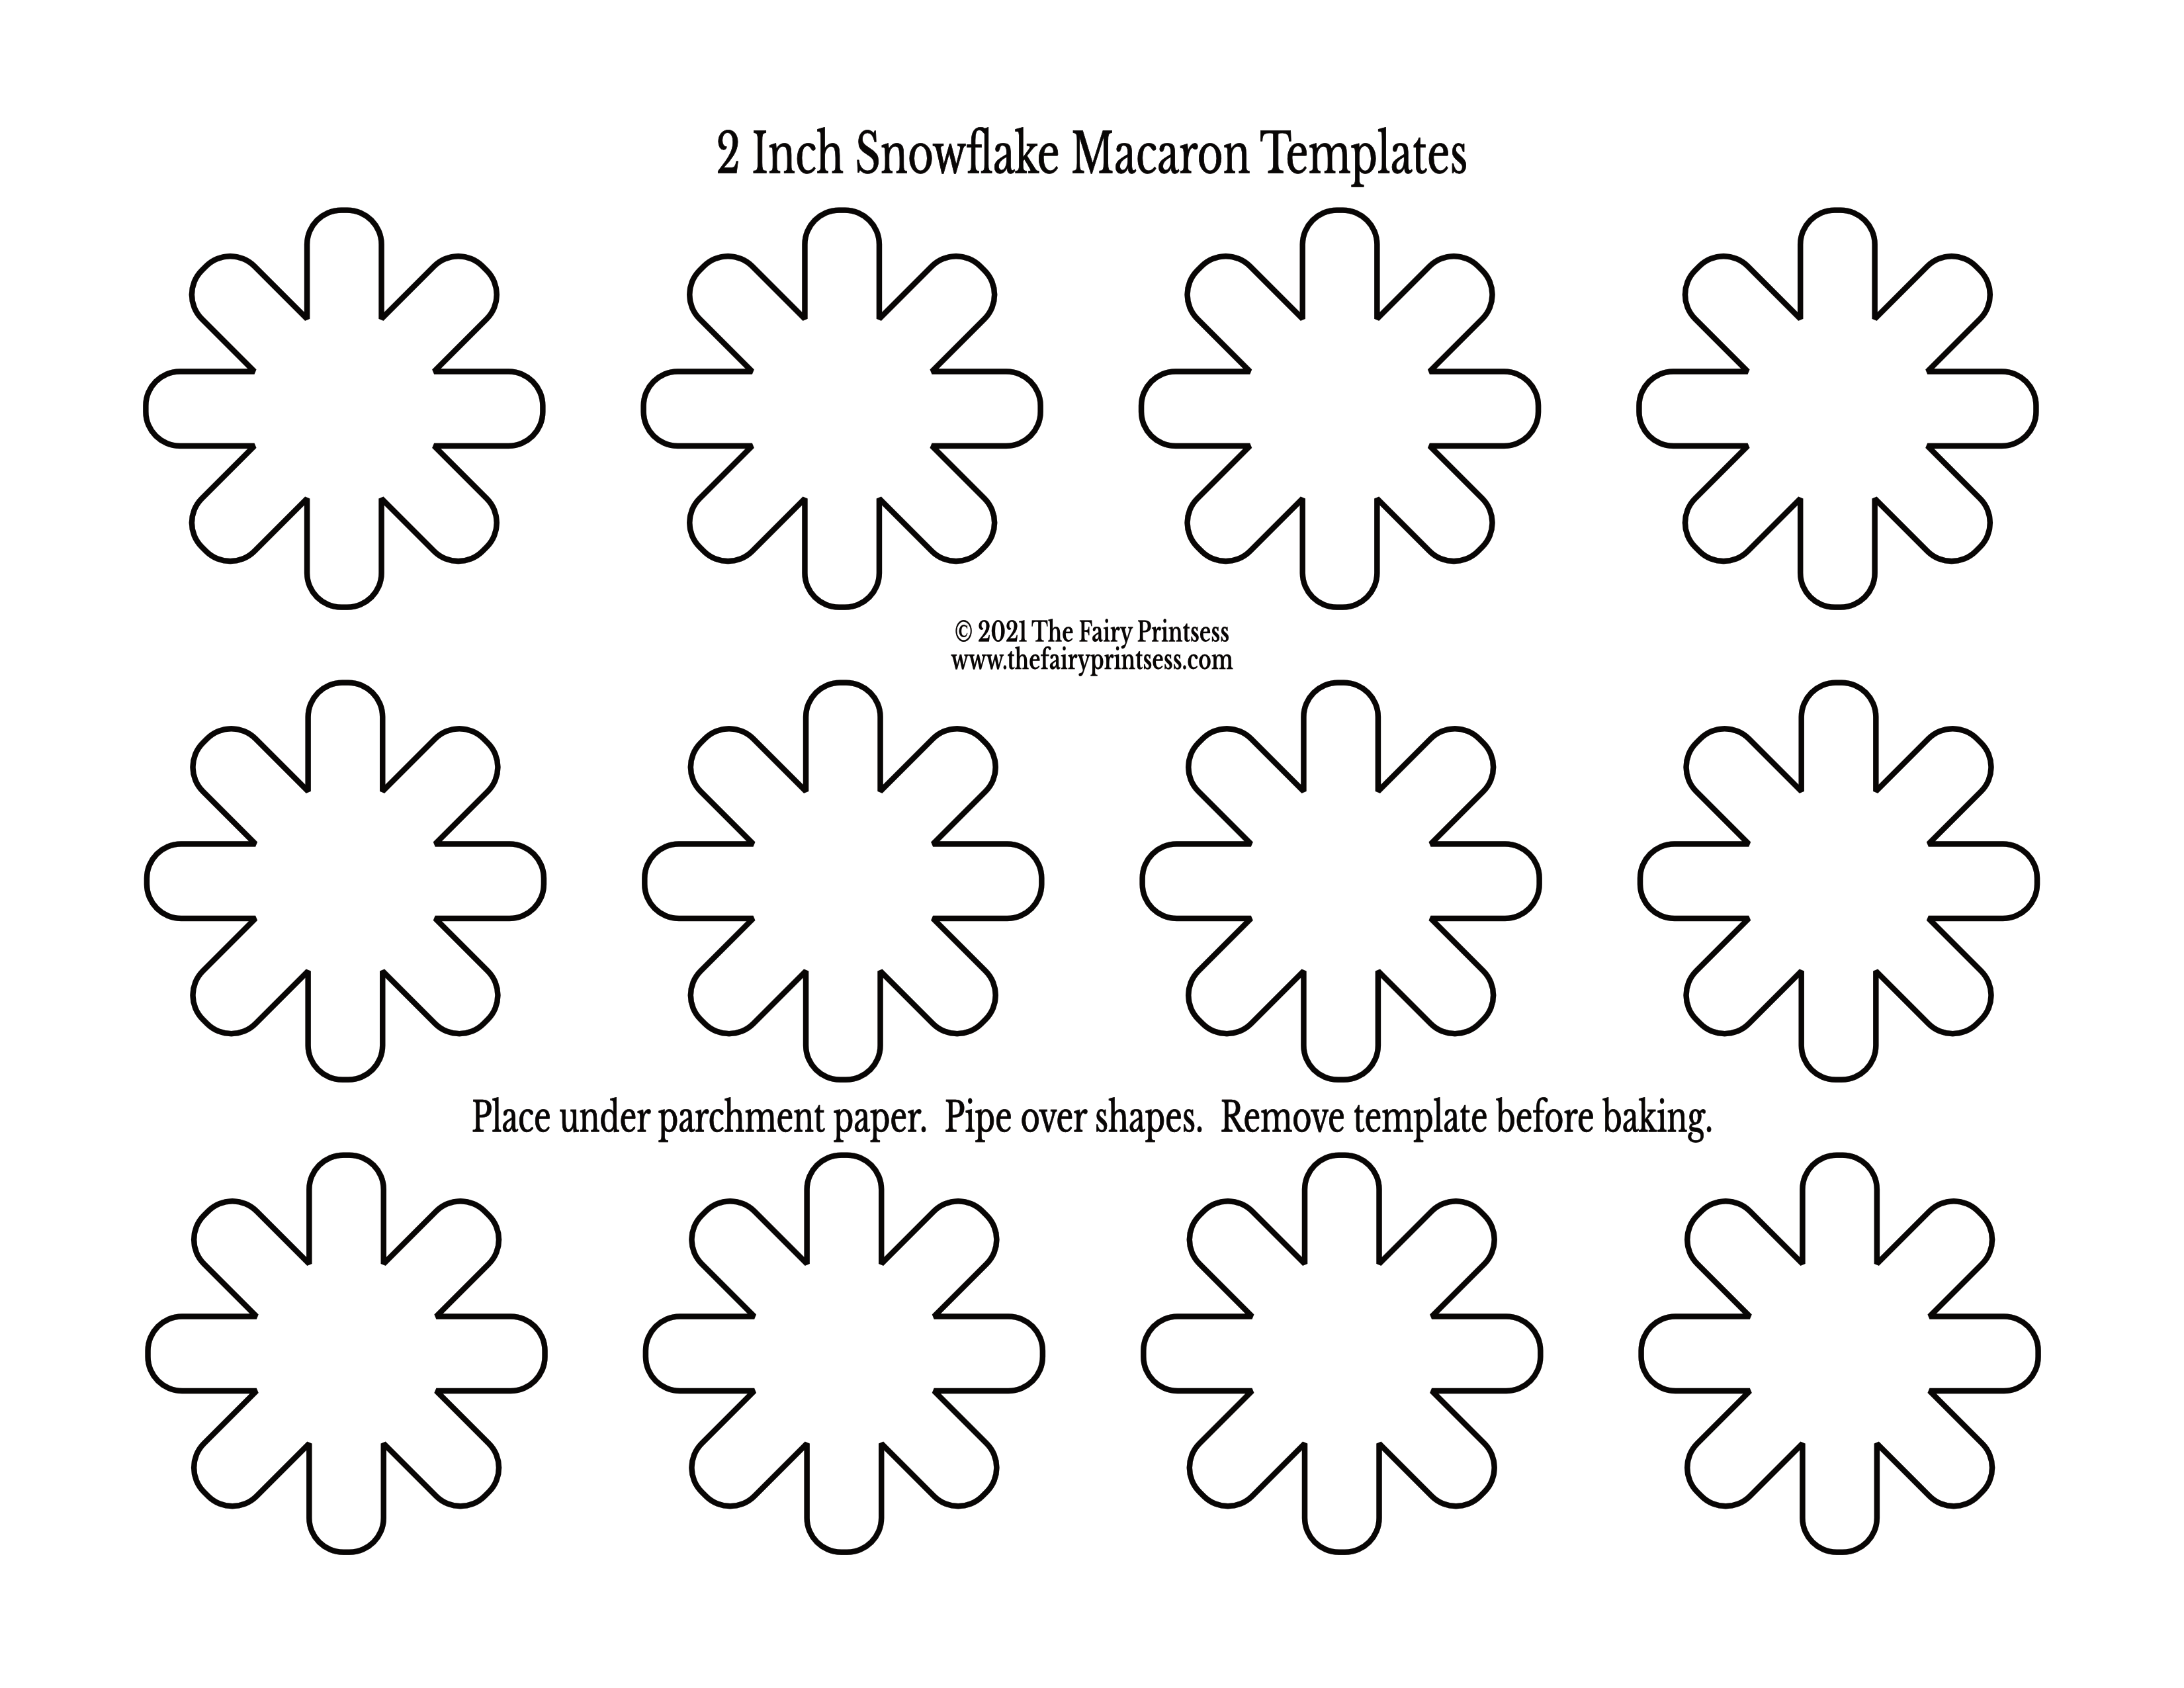 2 inch snowflake macaron template free printable